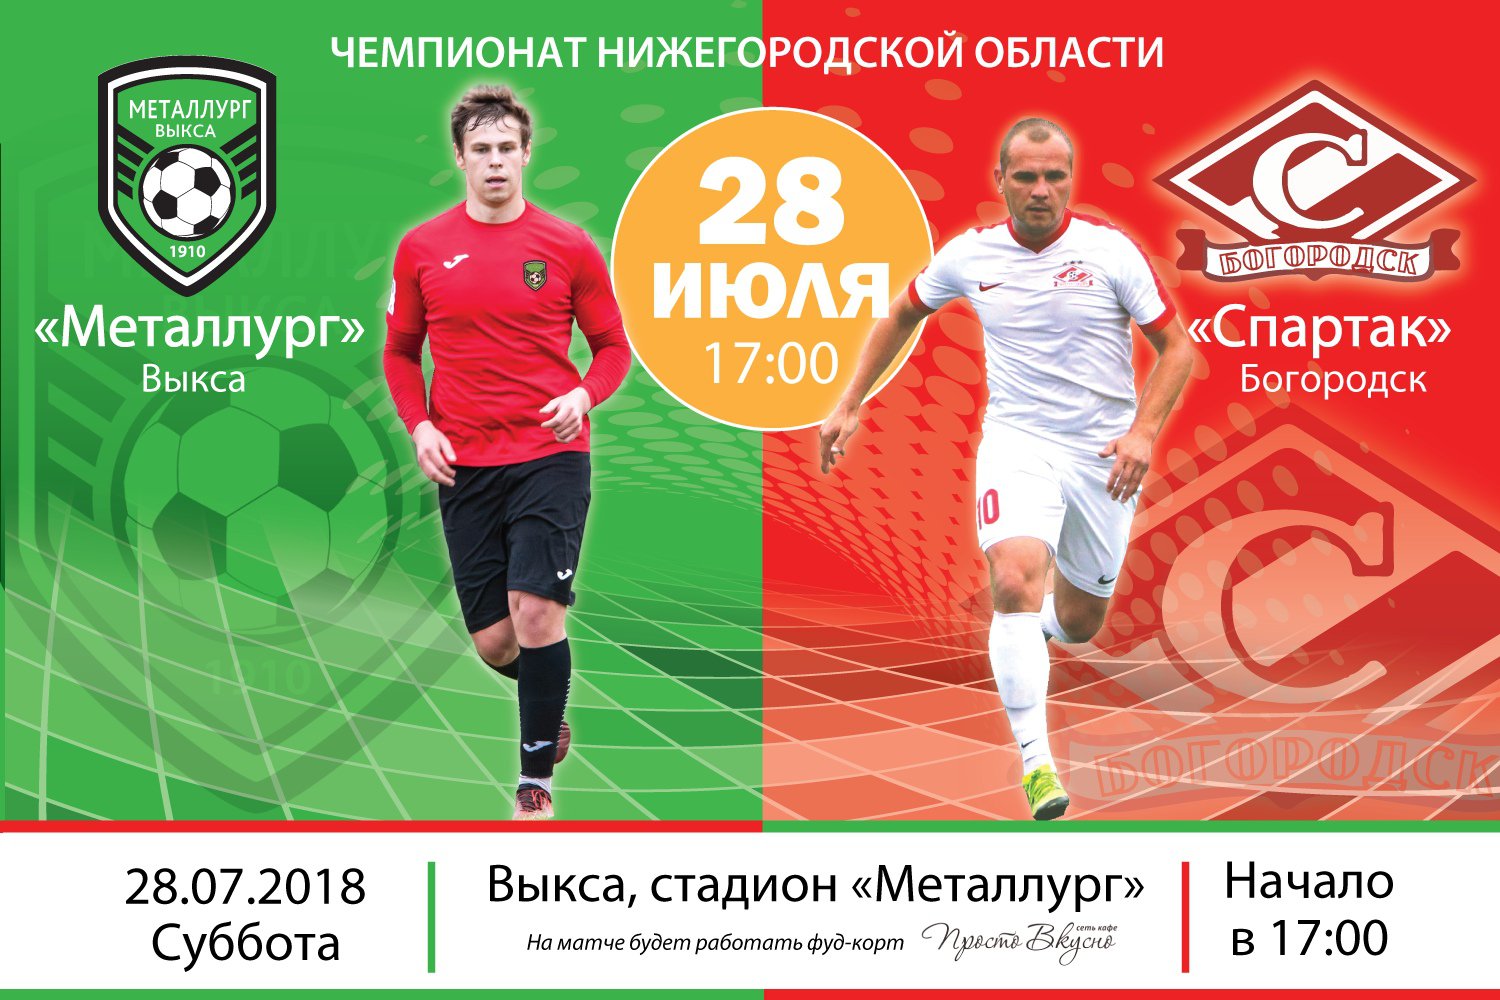 Футбол: «Металлург» Выкса — «Спартак» Богородск